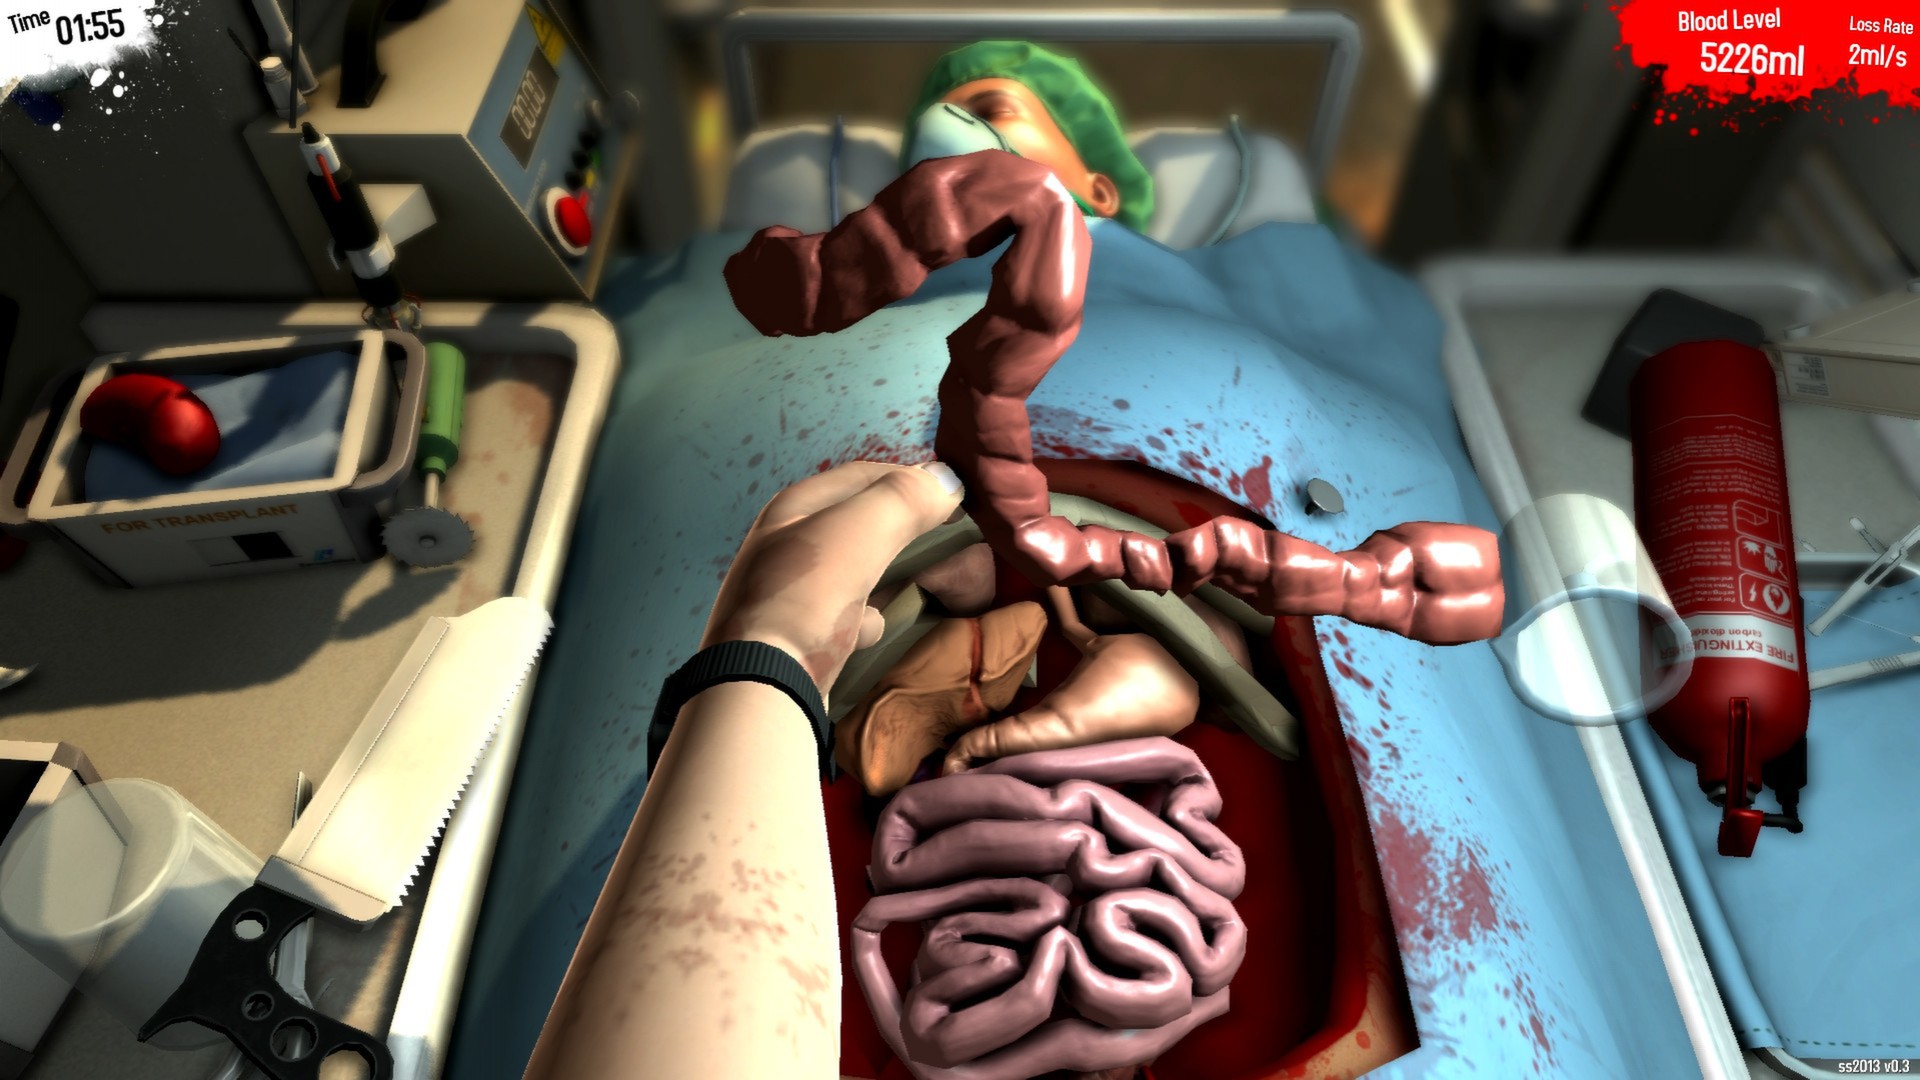 Surgeon Simulator 2013 Review | Brash Games